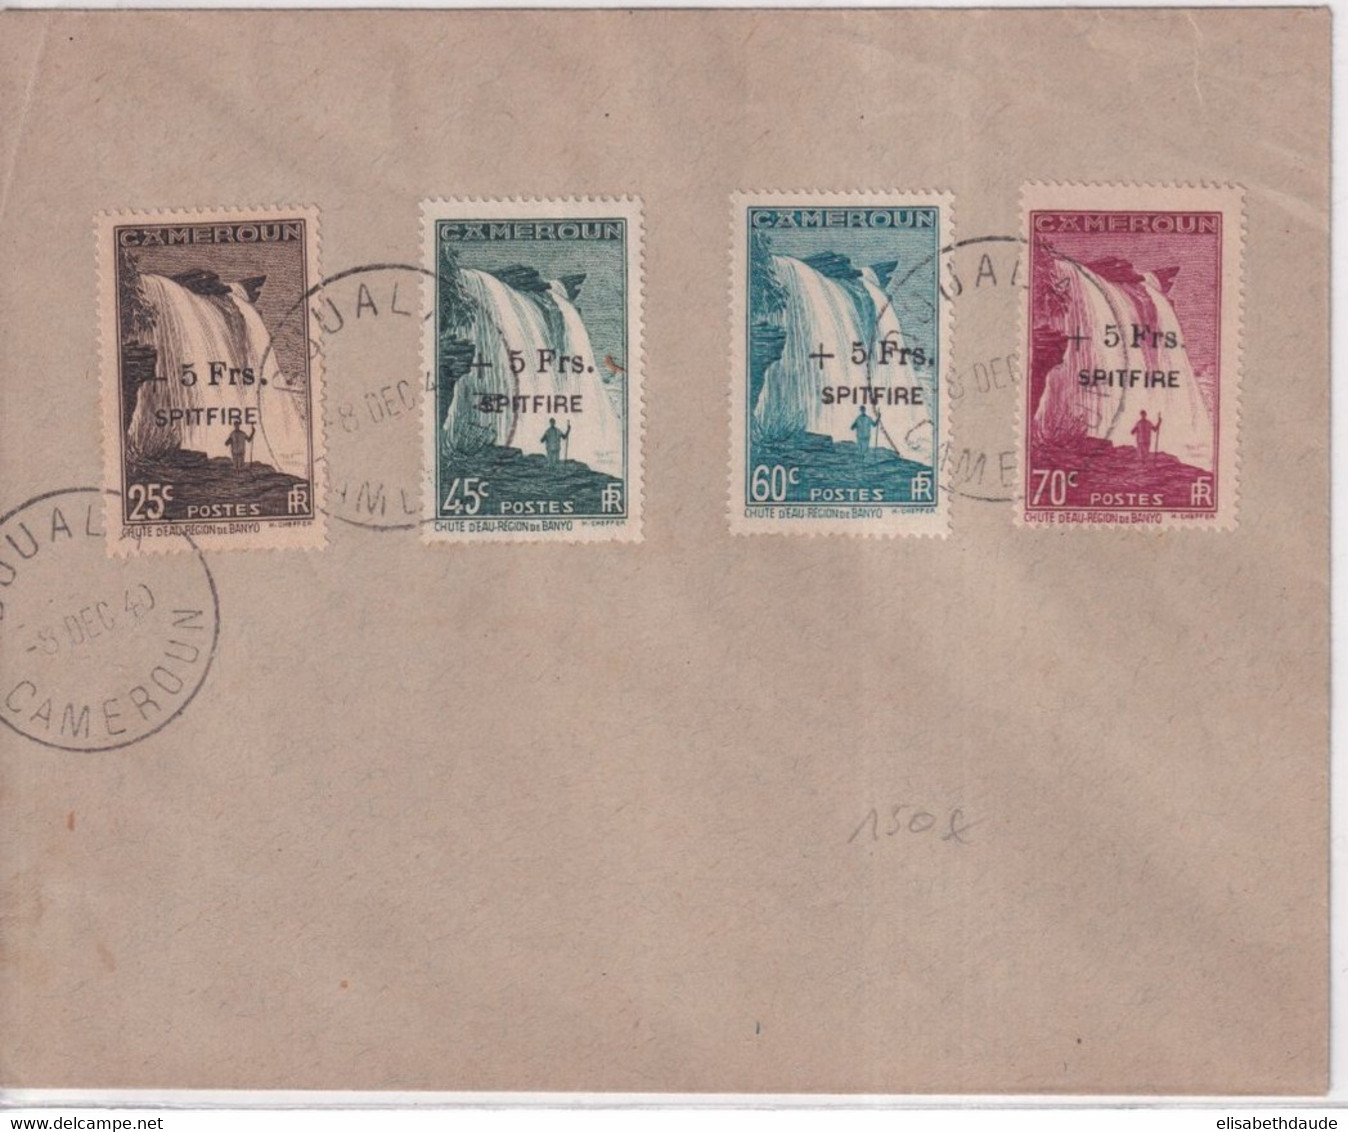 CAMEROUN - 1940 - SERIE FRANCE LIBRE "SPITFIRE" YVERT 236/239 OBLITEREE Sur ENVELOPPE - COTE = 580 EUR. - Storia Postale